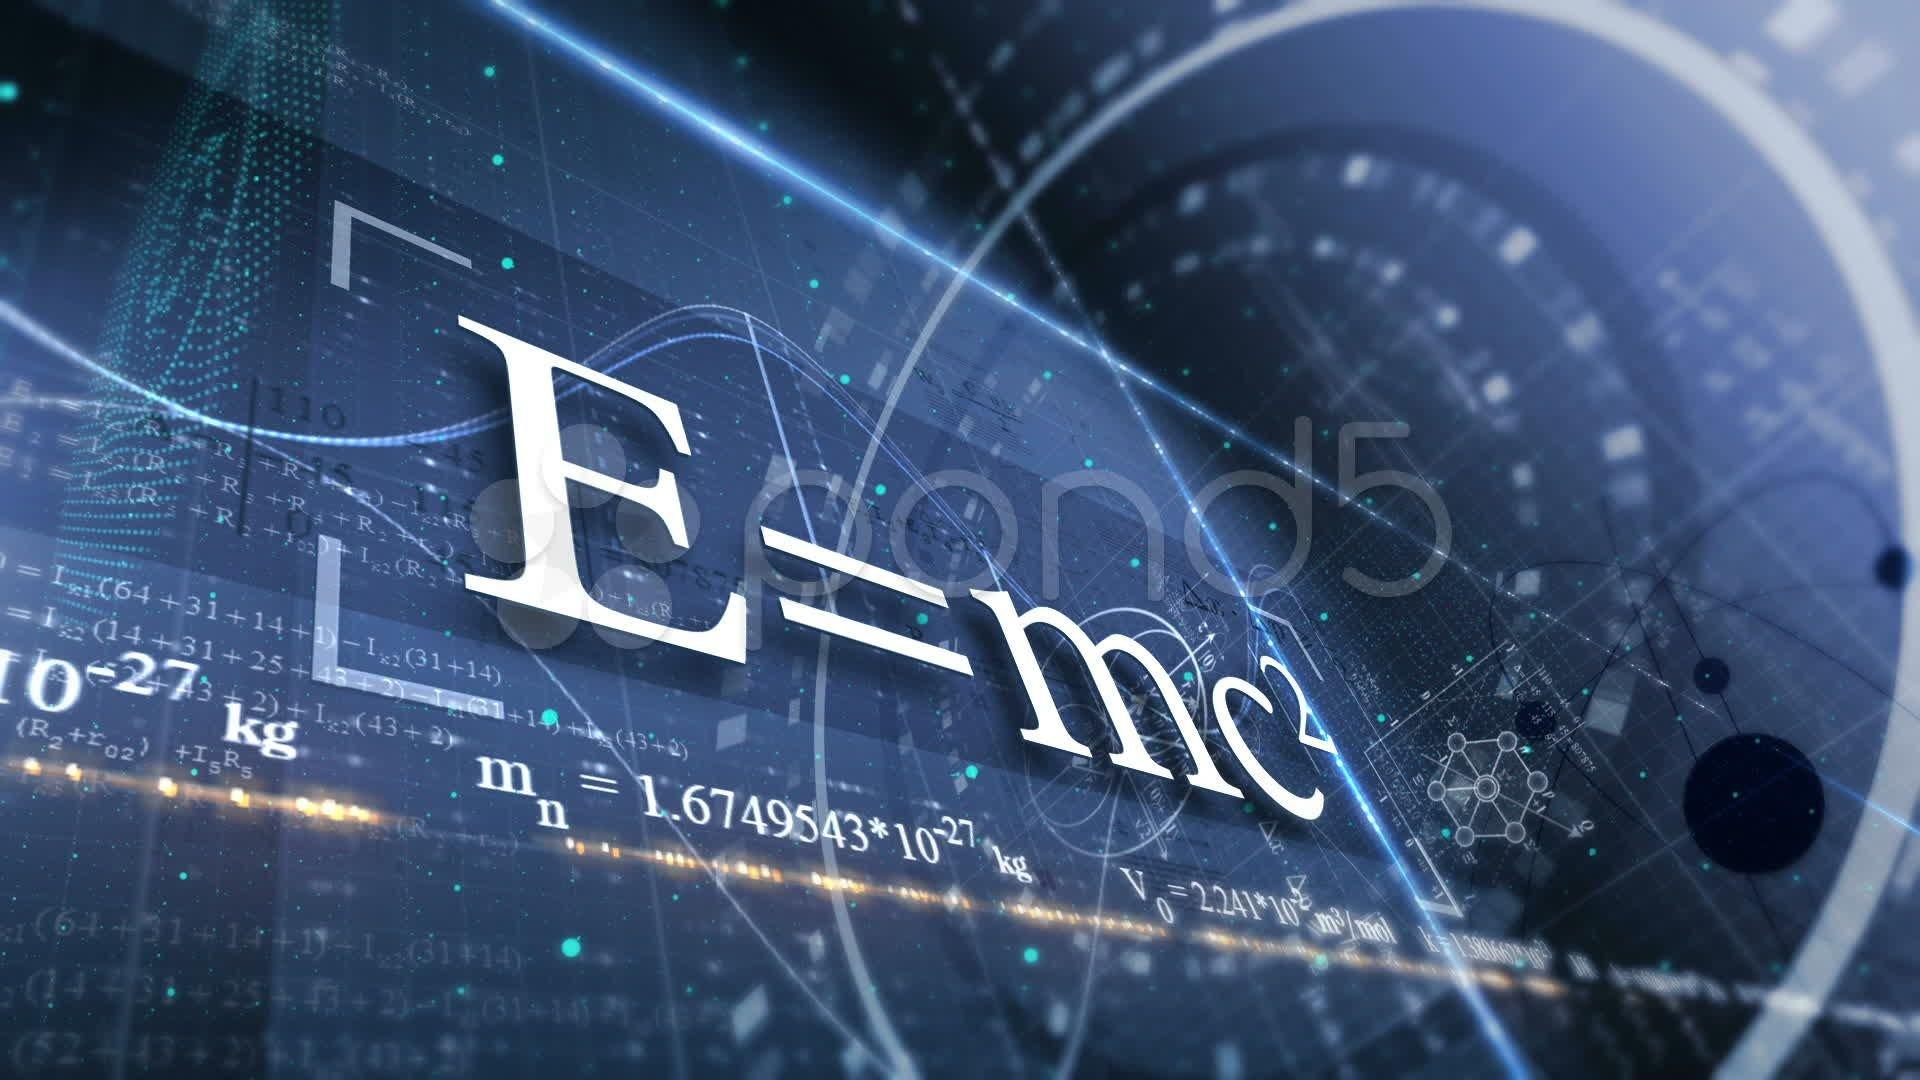 PHYSICS equation mathematics math formula poster science text